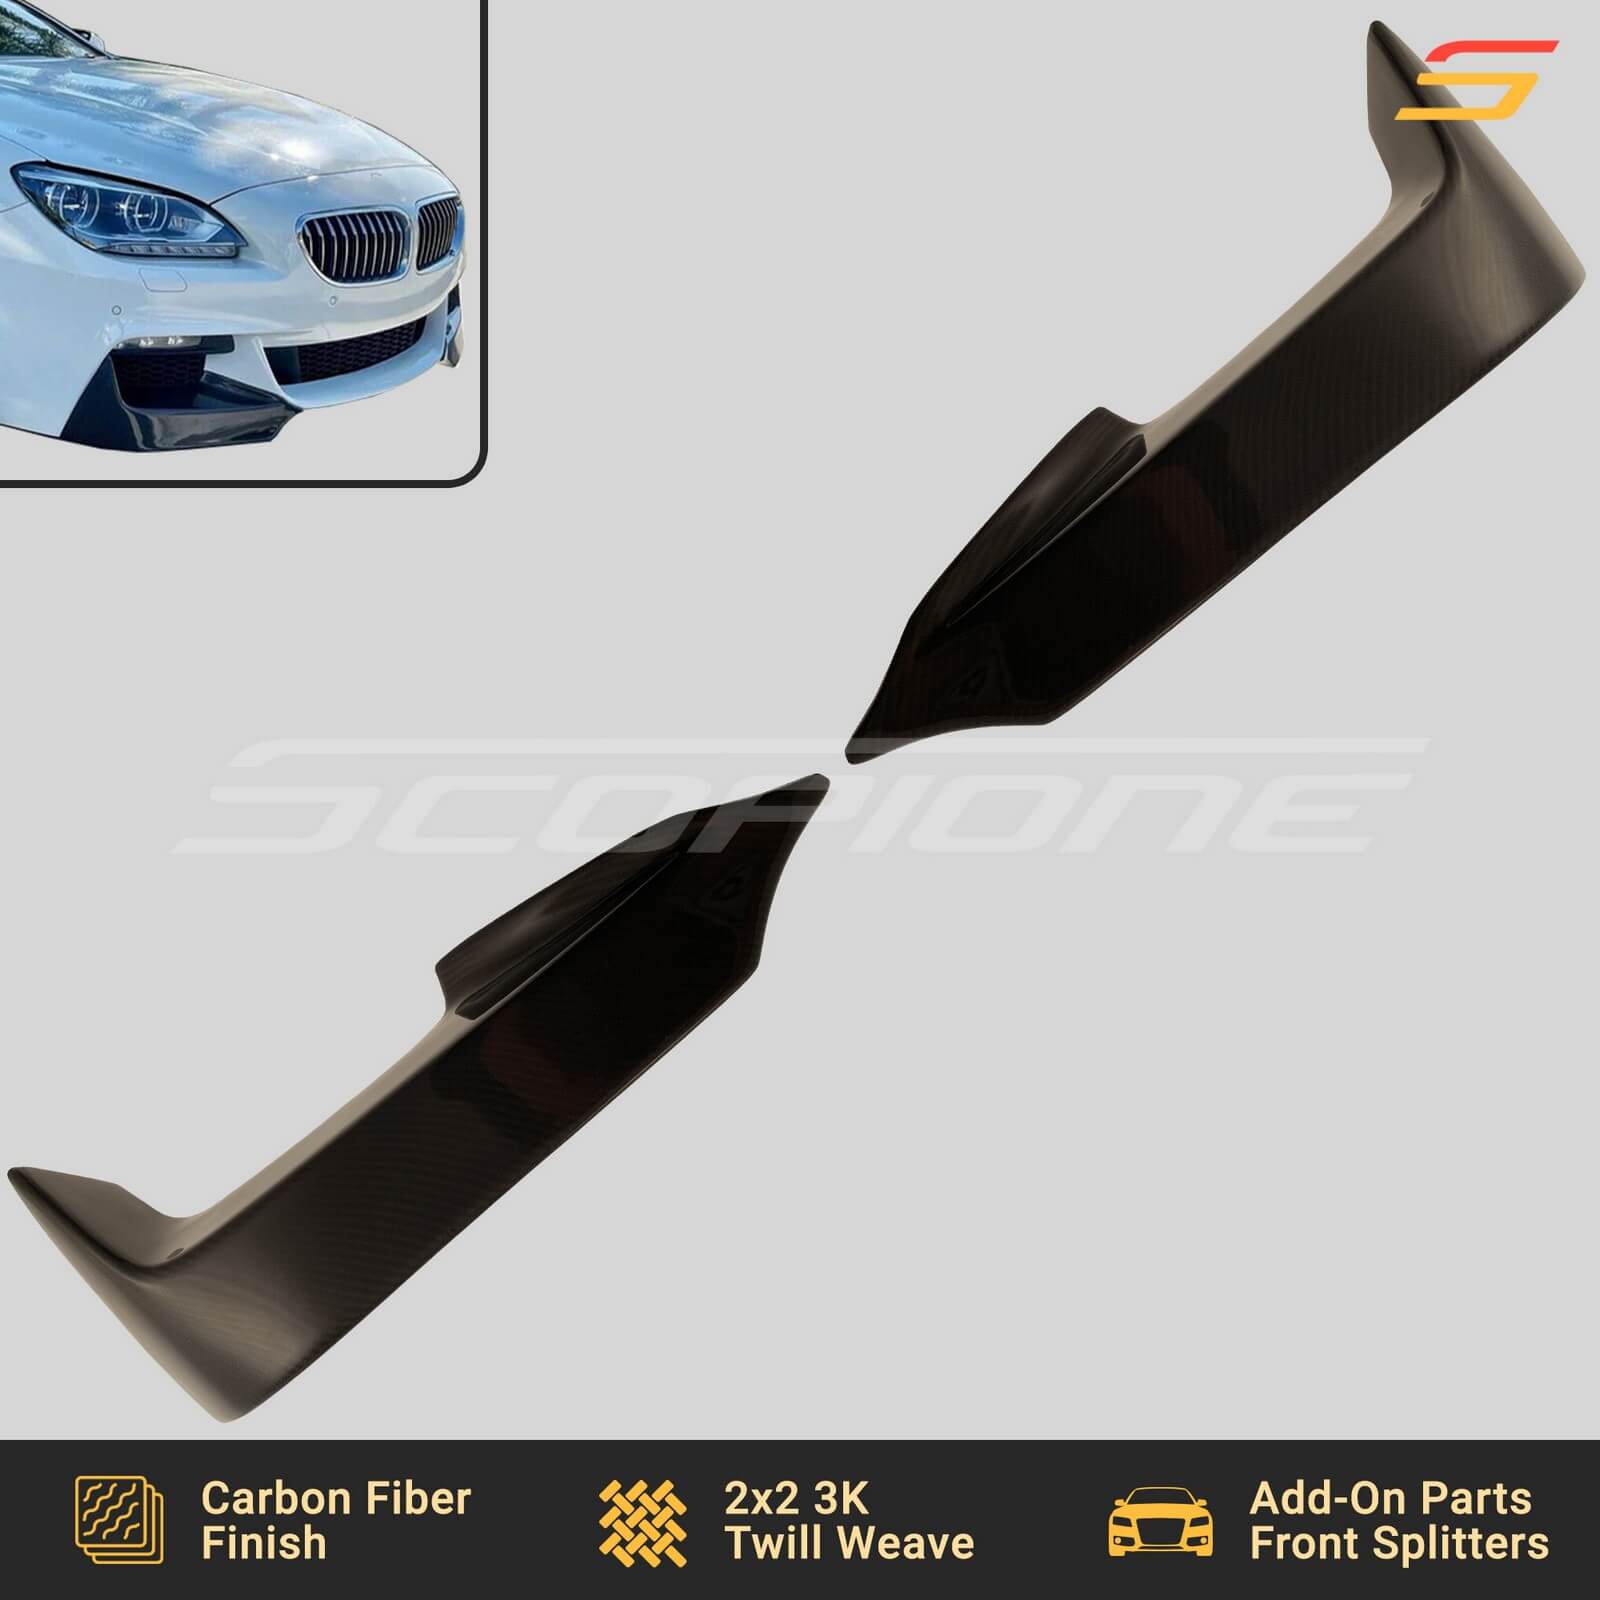 Quality Carbon Fiber Parts by Scopione for BMW 6 Series & M6